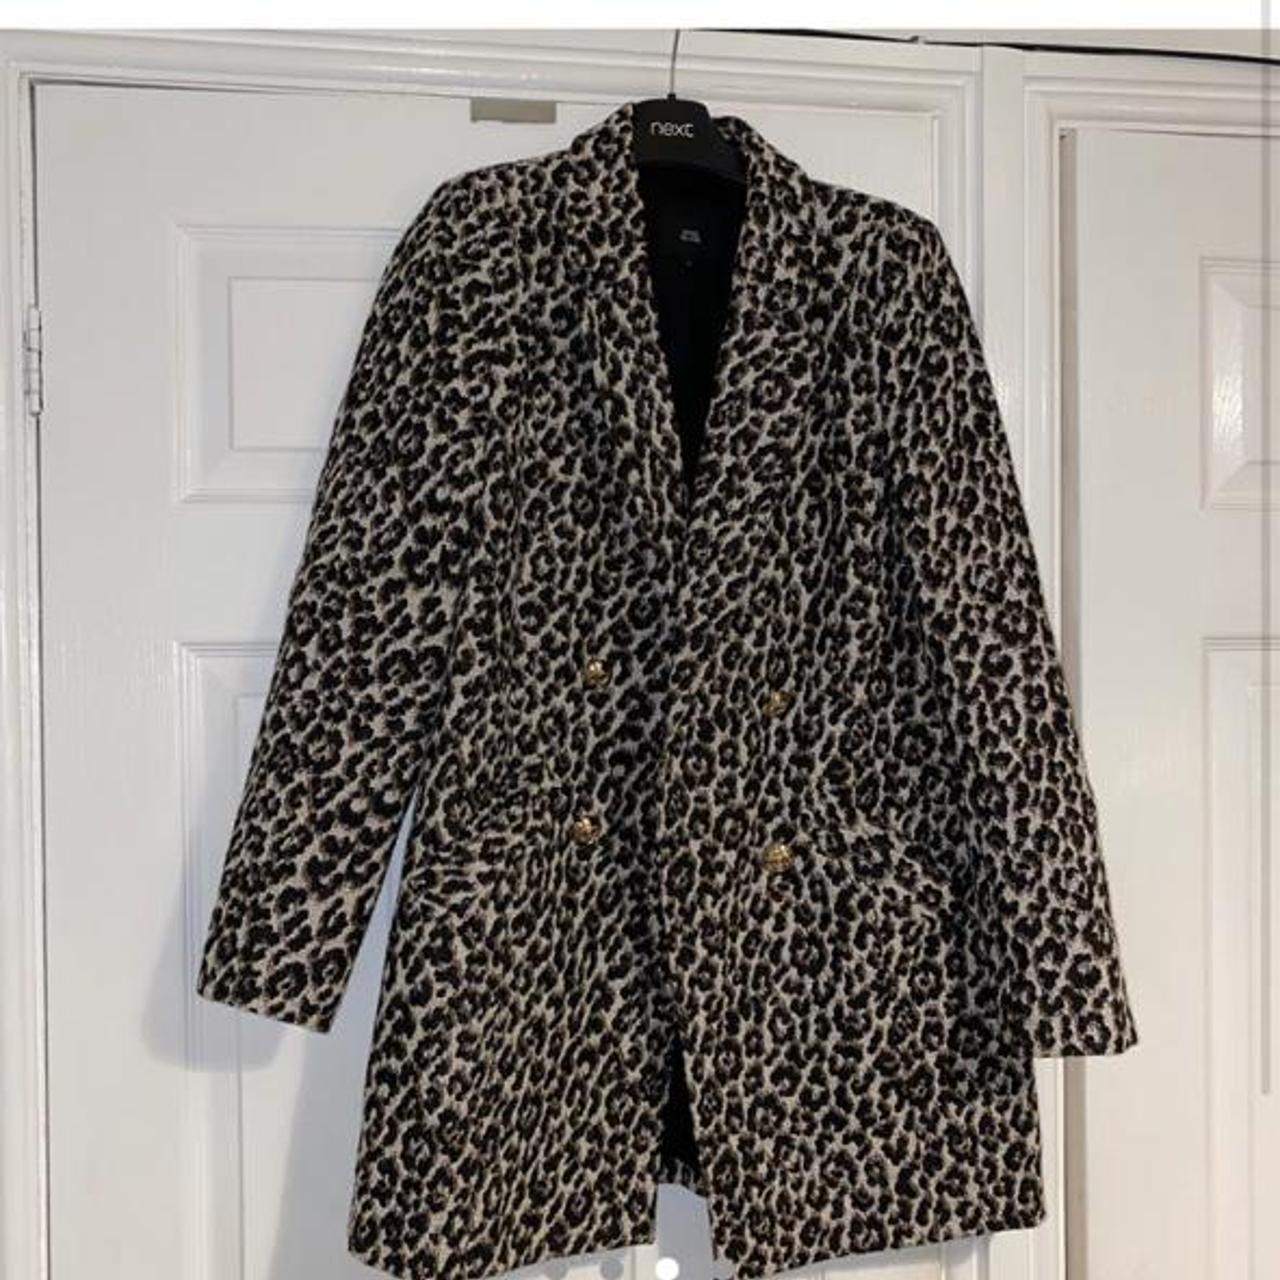 River island leopard print double breasted jacket / - Depop